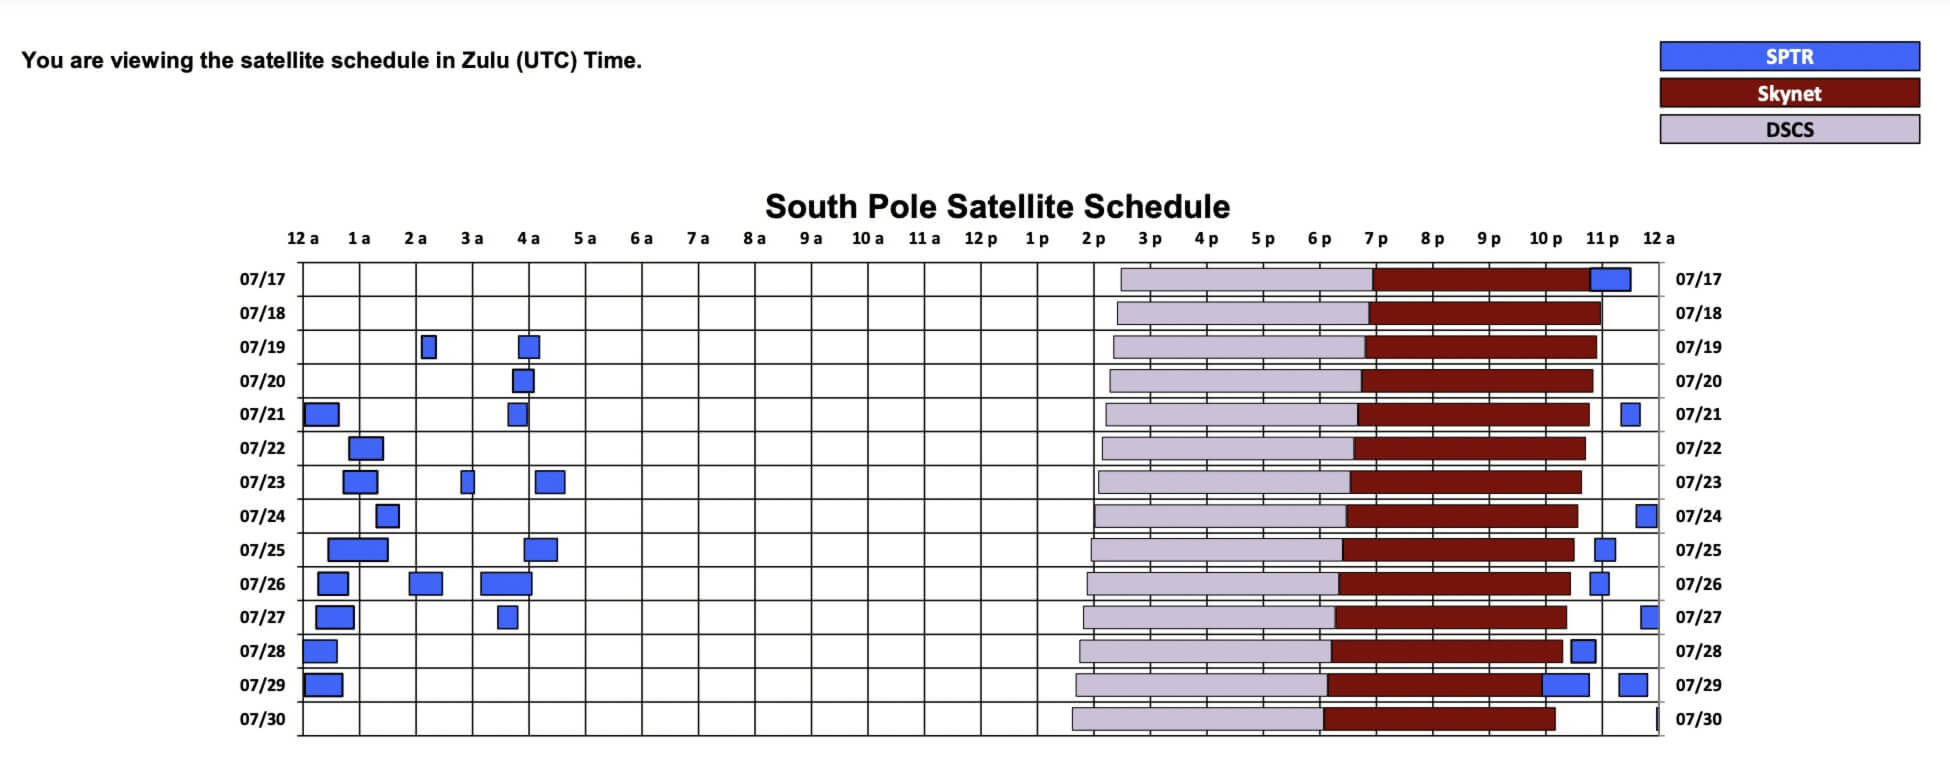 South Pole satellite schedule